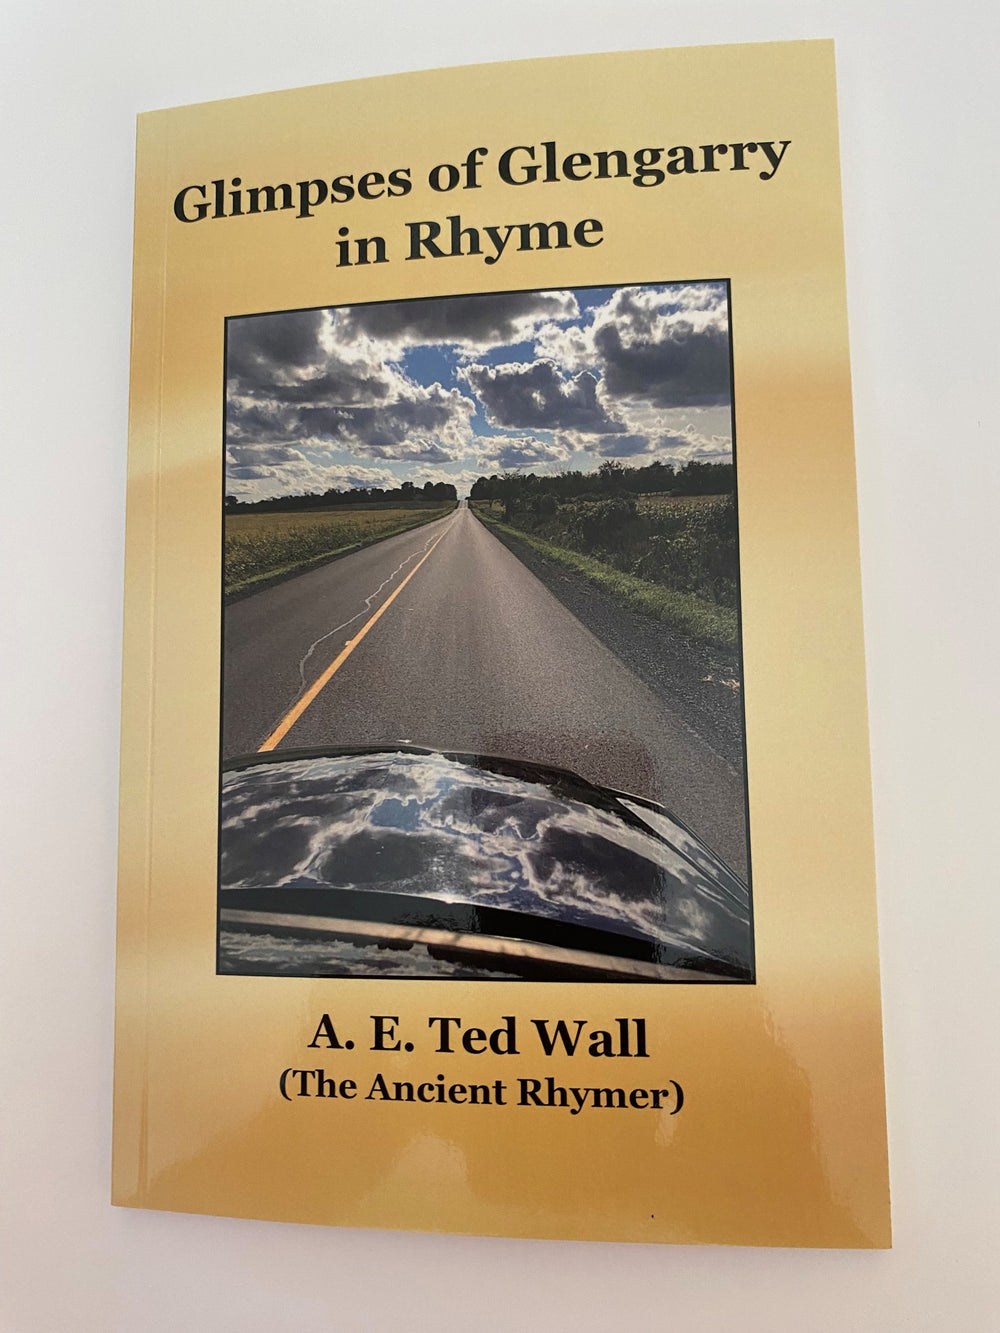 Glimpses of Glengarry in Rhyme